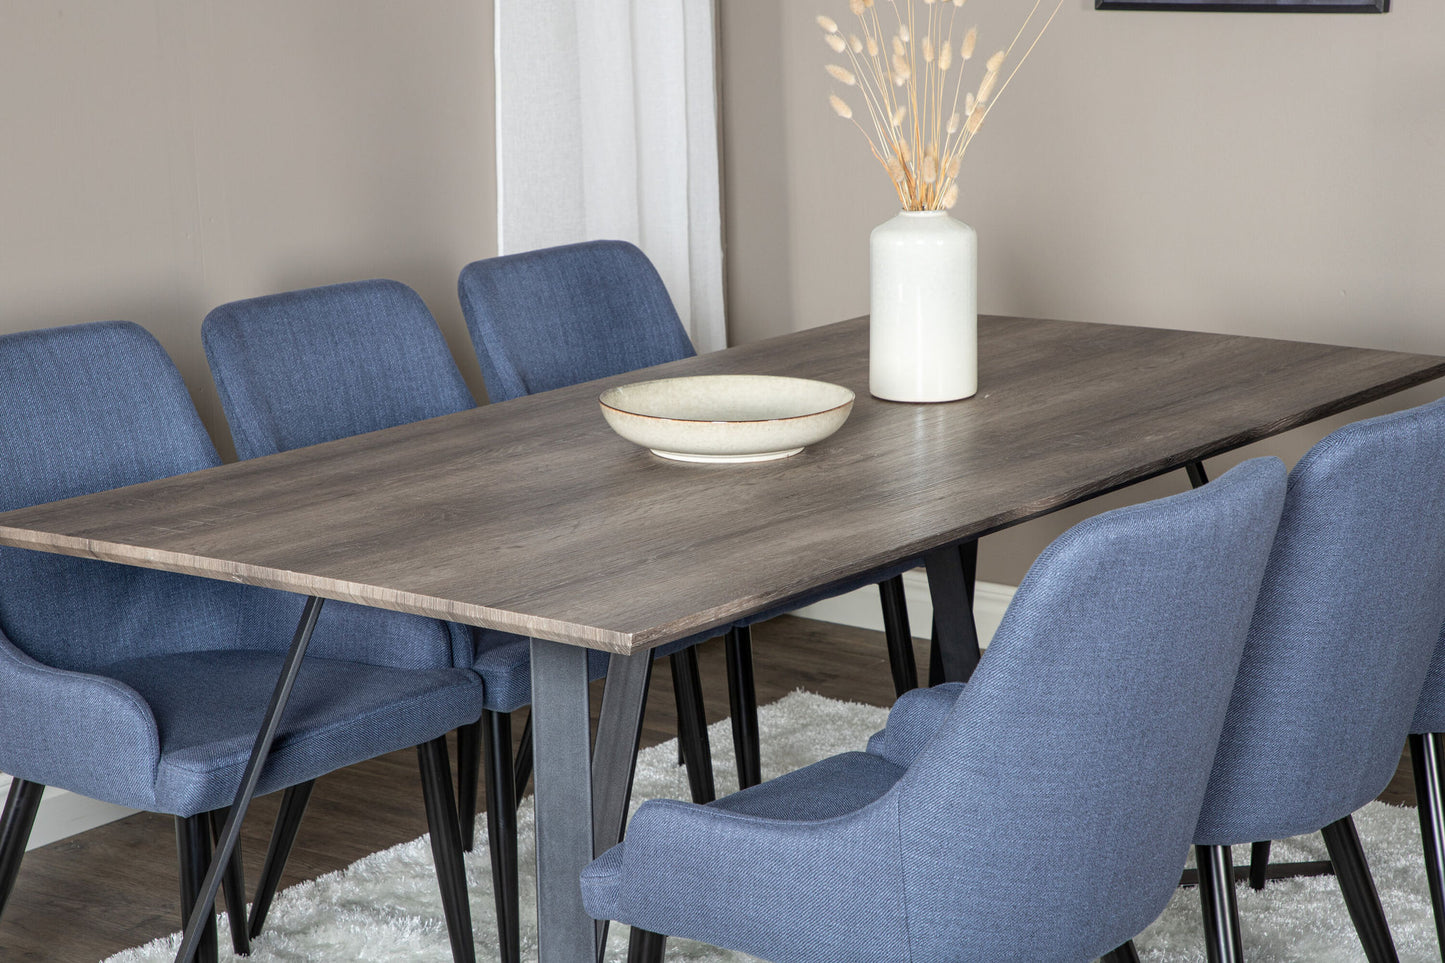 Maria - Spisebord, 180*90*H75 - Grå / Sort+ Plaza Spisebordsstol - Sorte ben - Blåt stof